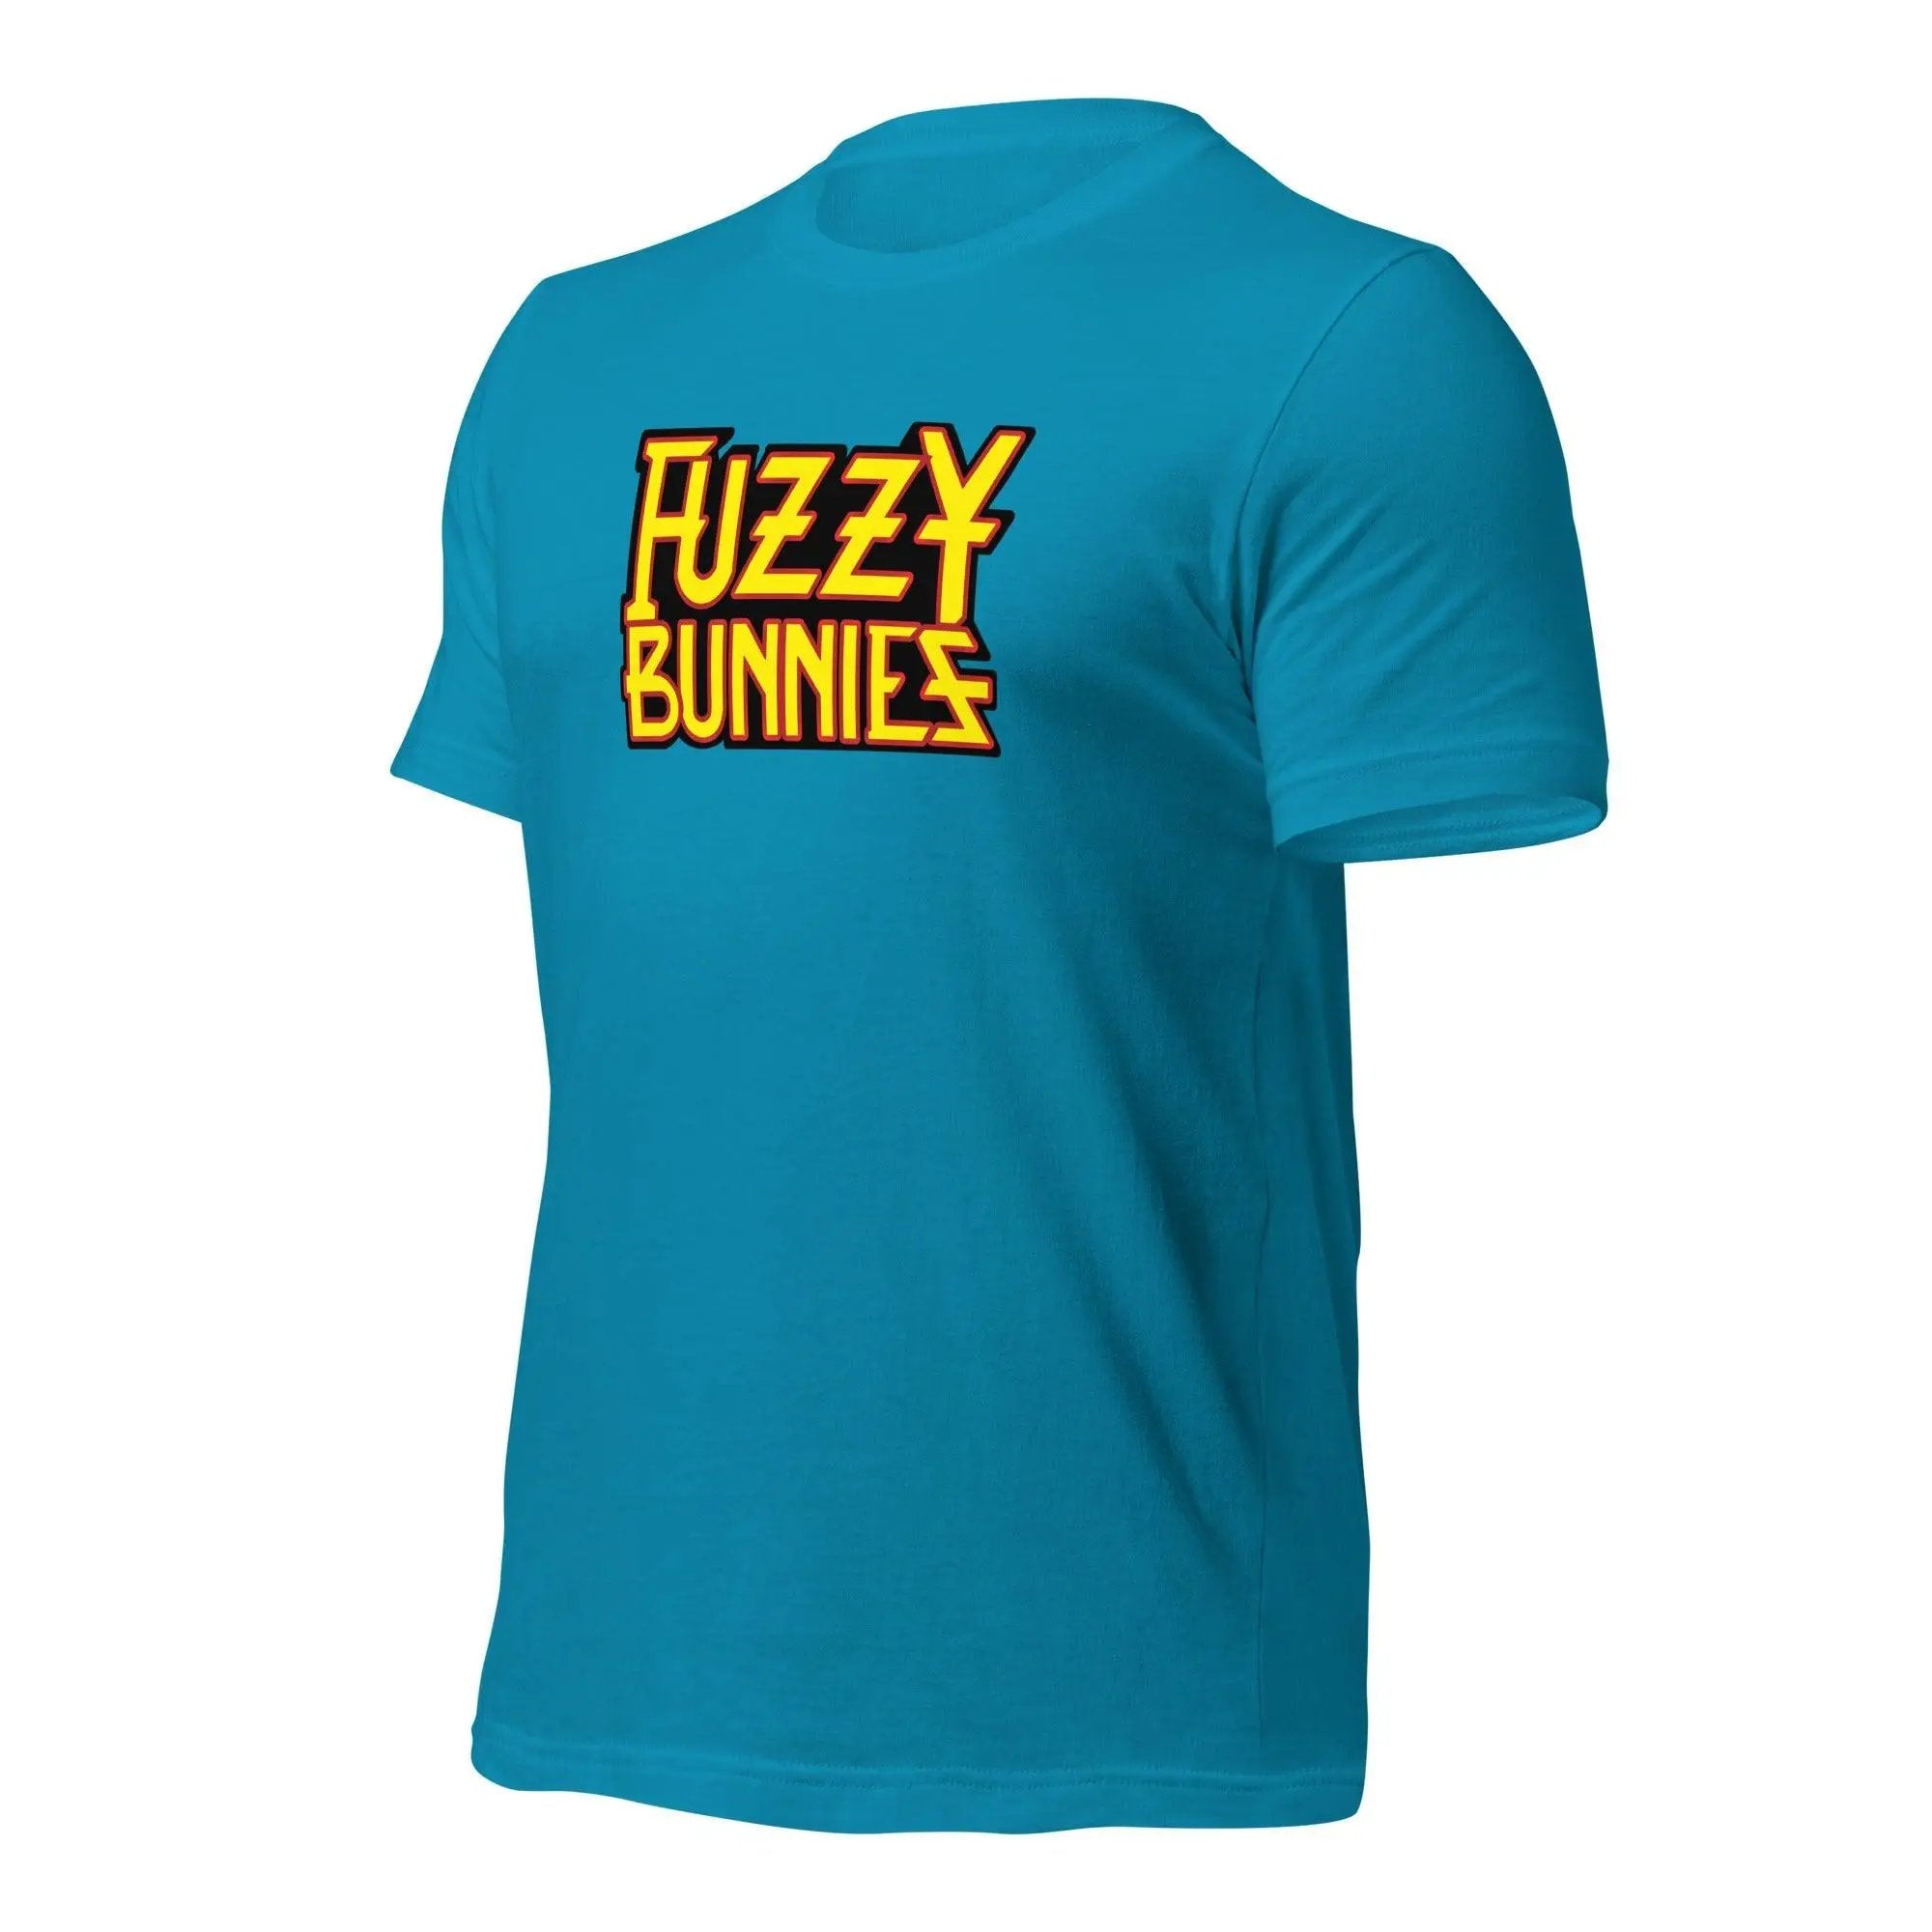 Fuzzy Bunnies Unisex t-shirt